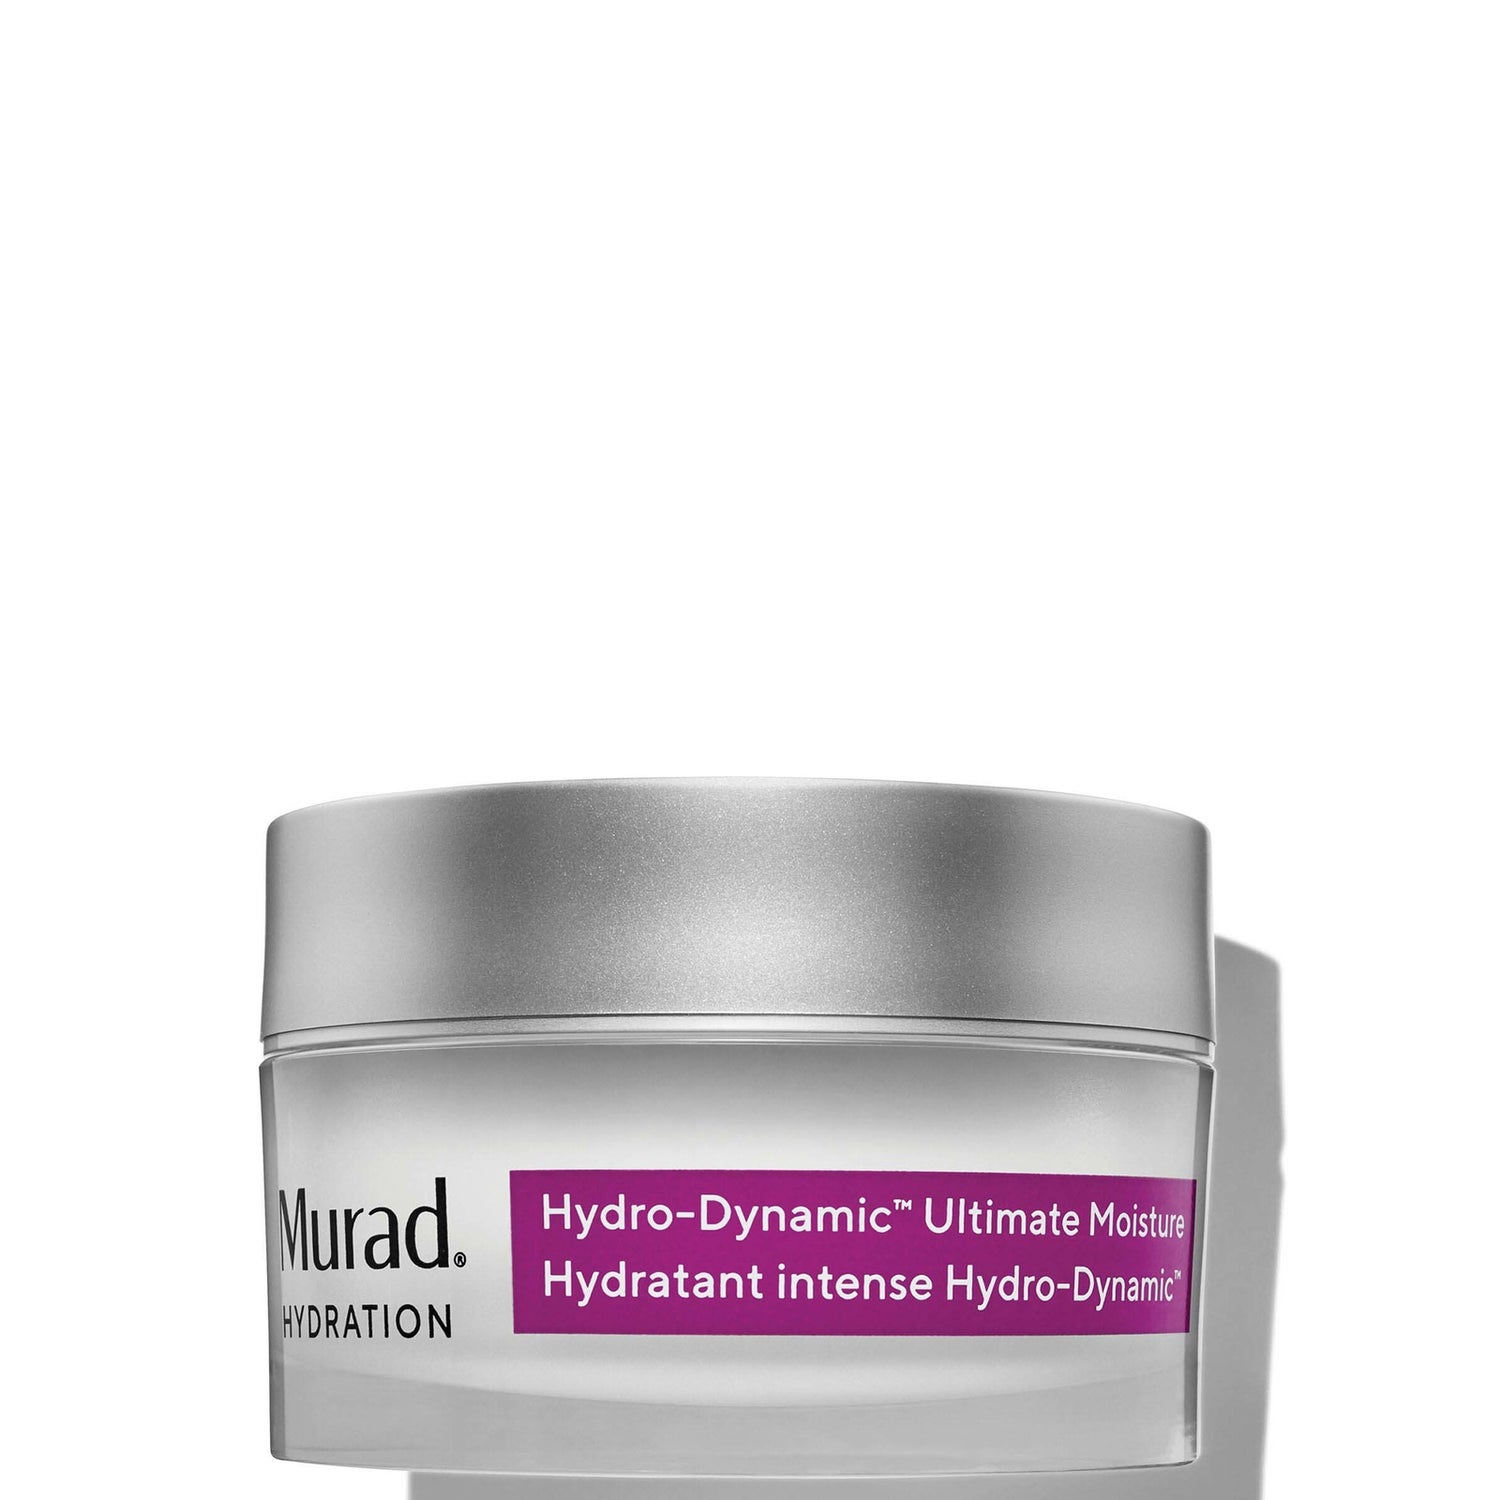 Murad Hydro-Dynamic Ultimate Moisture 1.7 oz